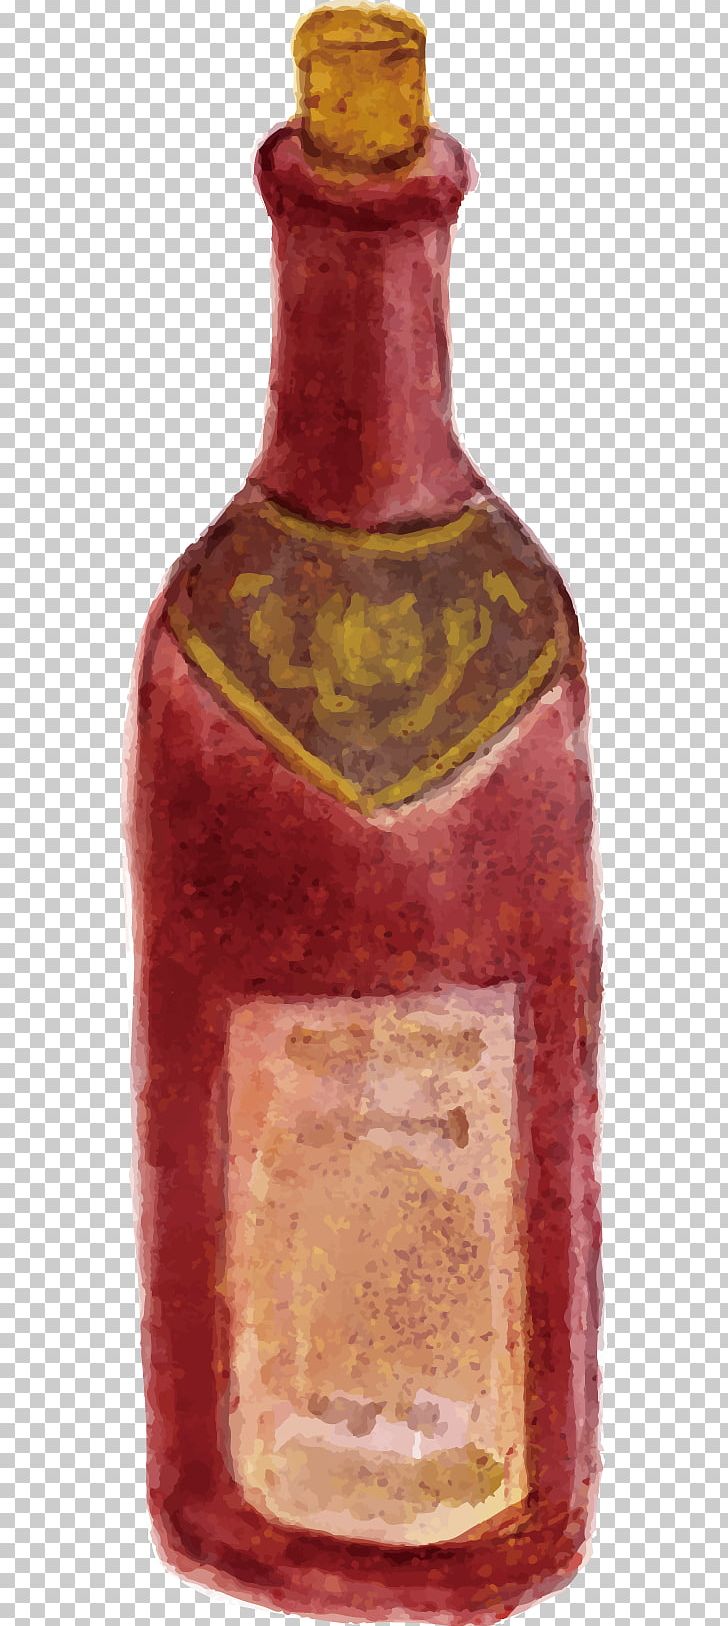 Red Wine Bottle PNG, Clipart, Artifact, Barware, Bottle, Cork, Designer Free PNG Download